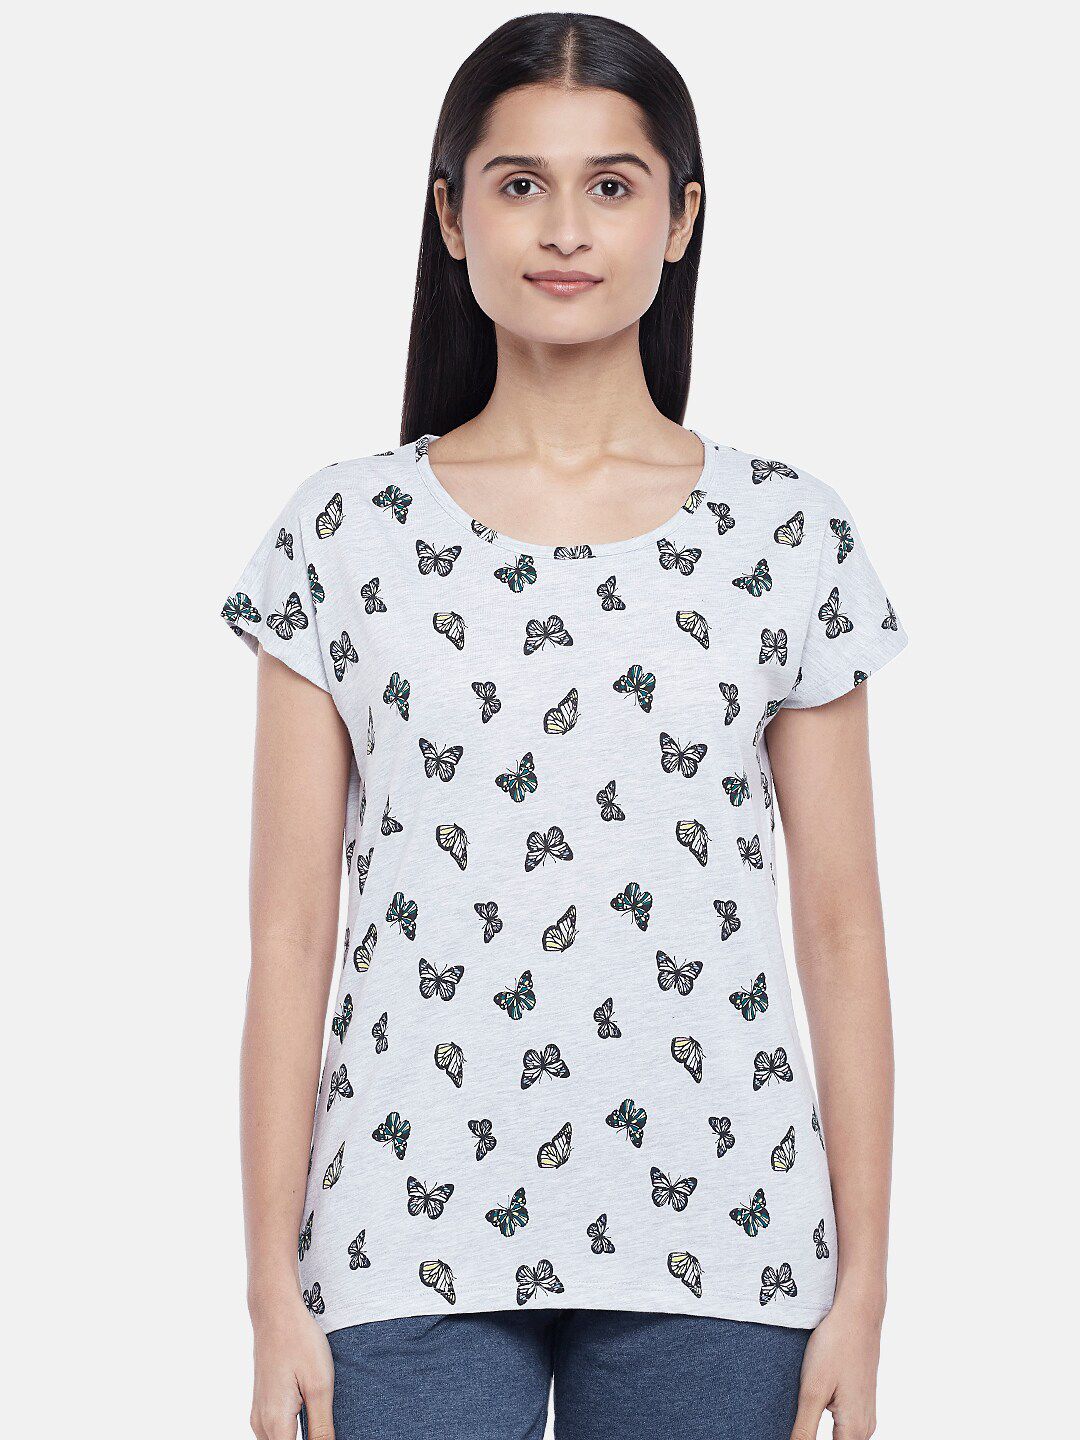 Dreamz by Pantaloons Women Grey Melange & Black Printed Round Neck Pure Cotton Regular Lounge tshirt Price in India